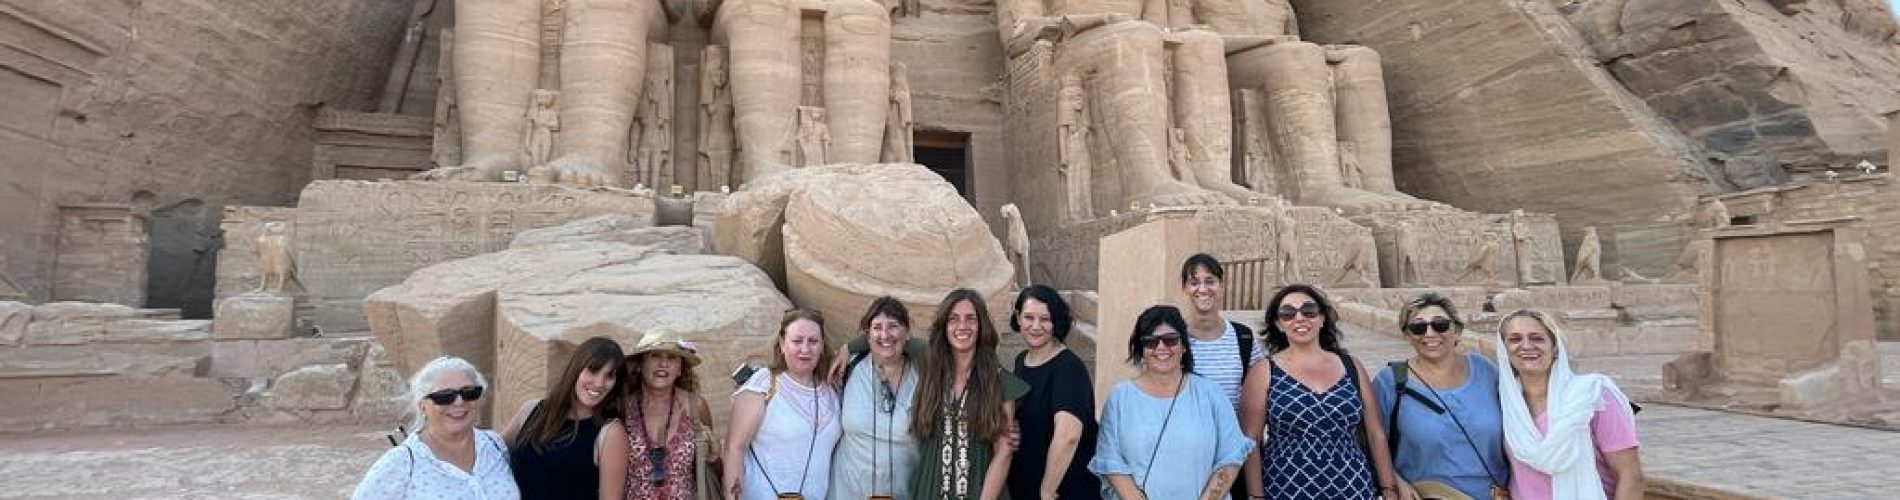 Egipto, Abu Simbel, grupo mujeres